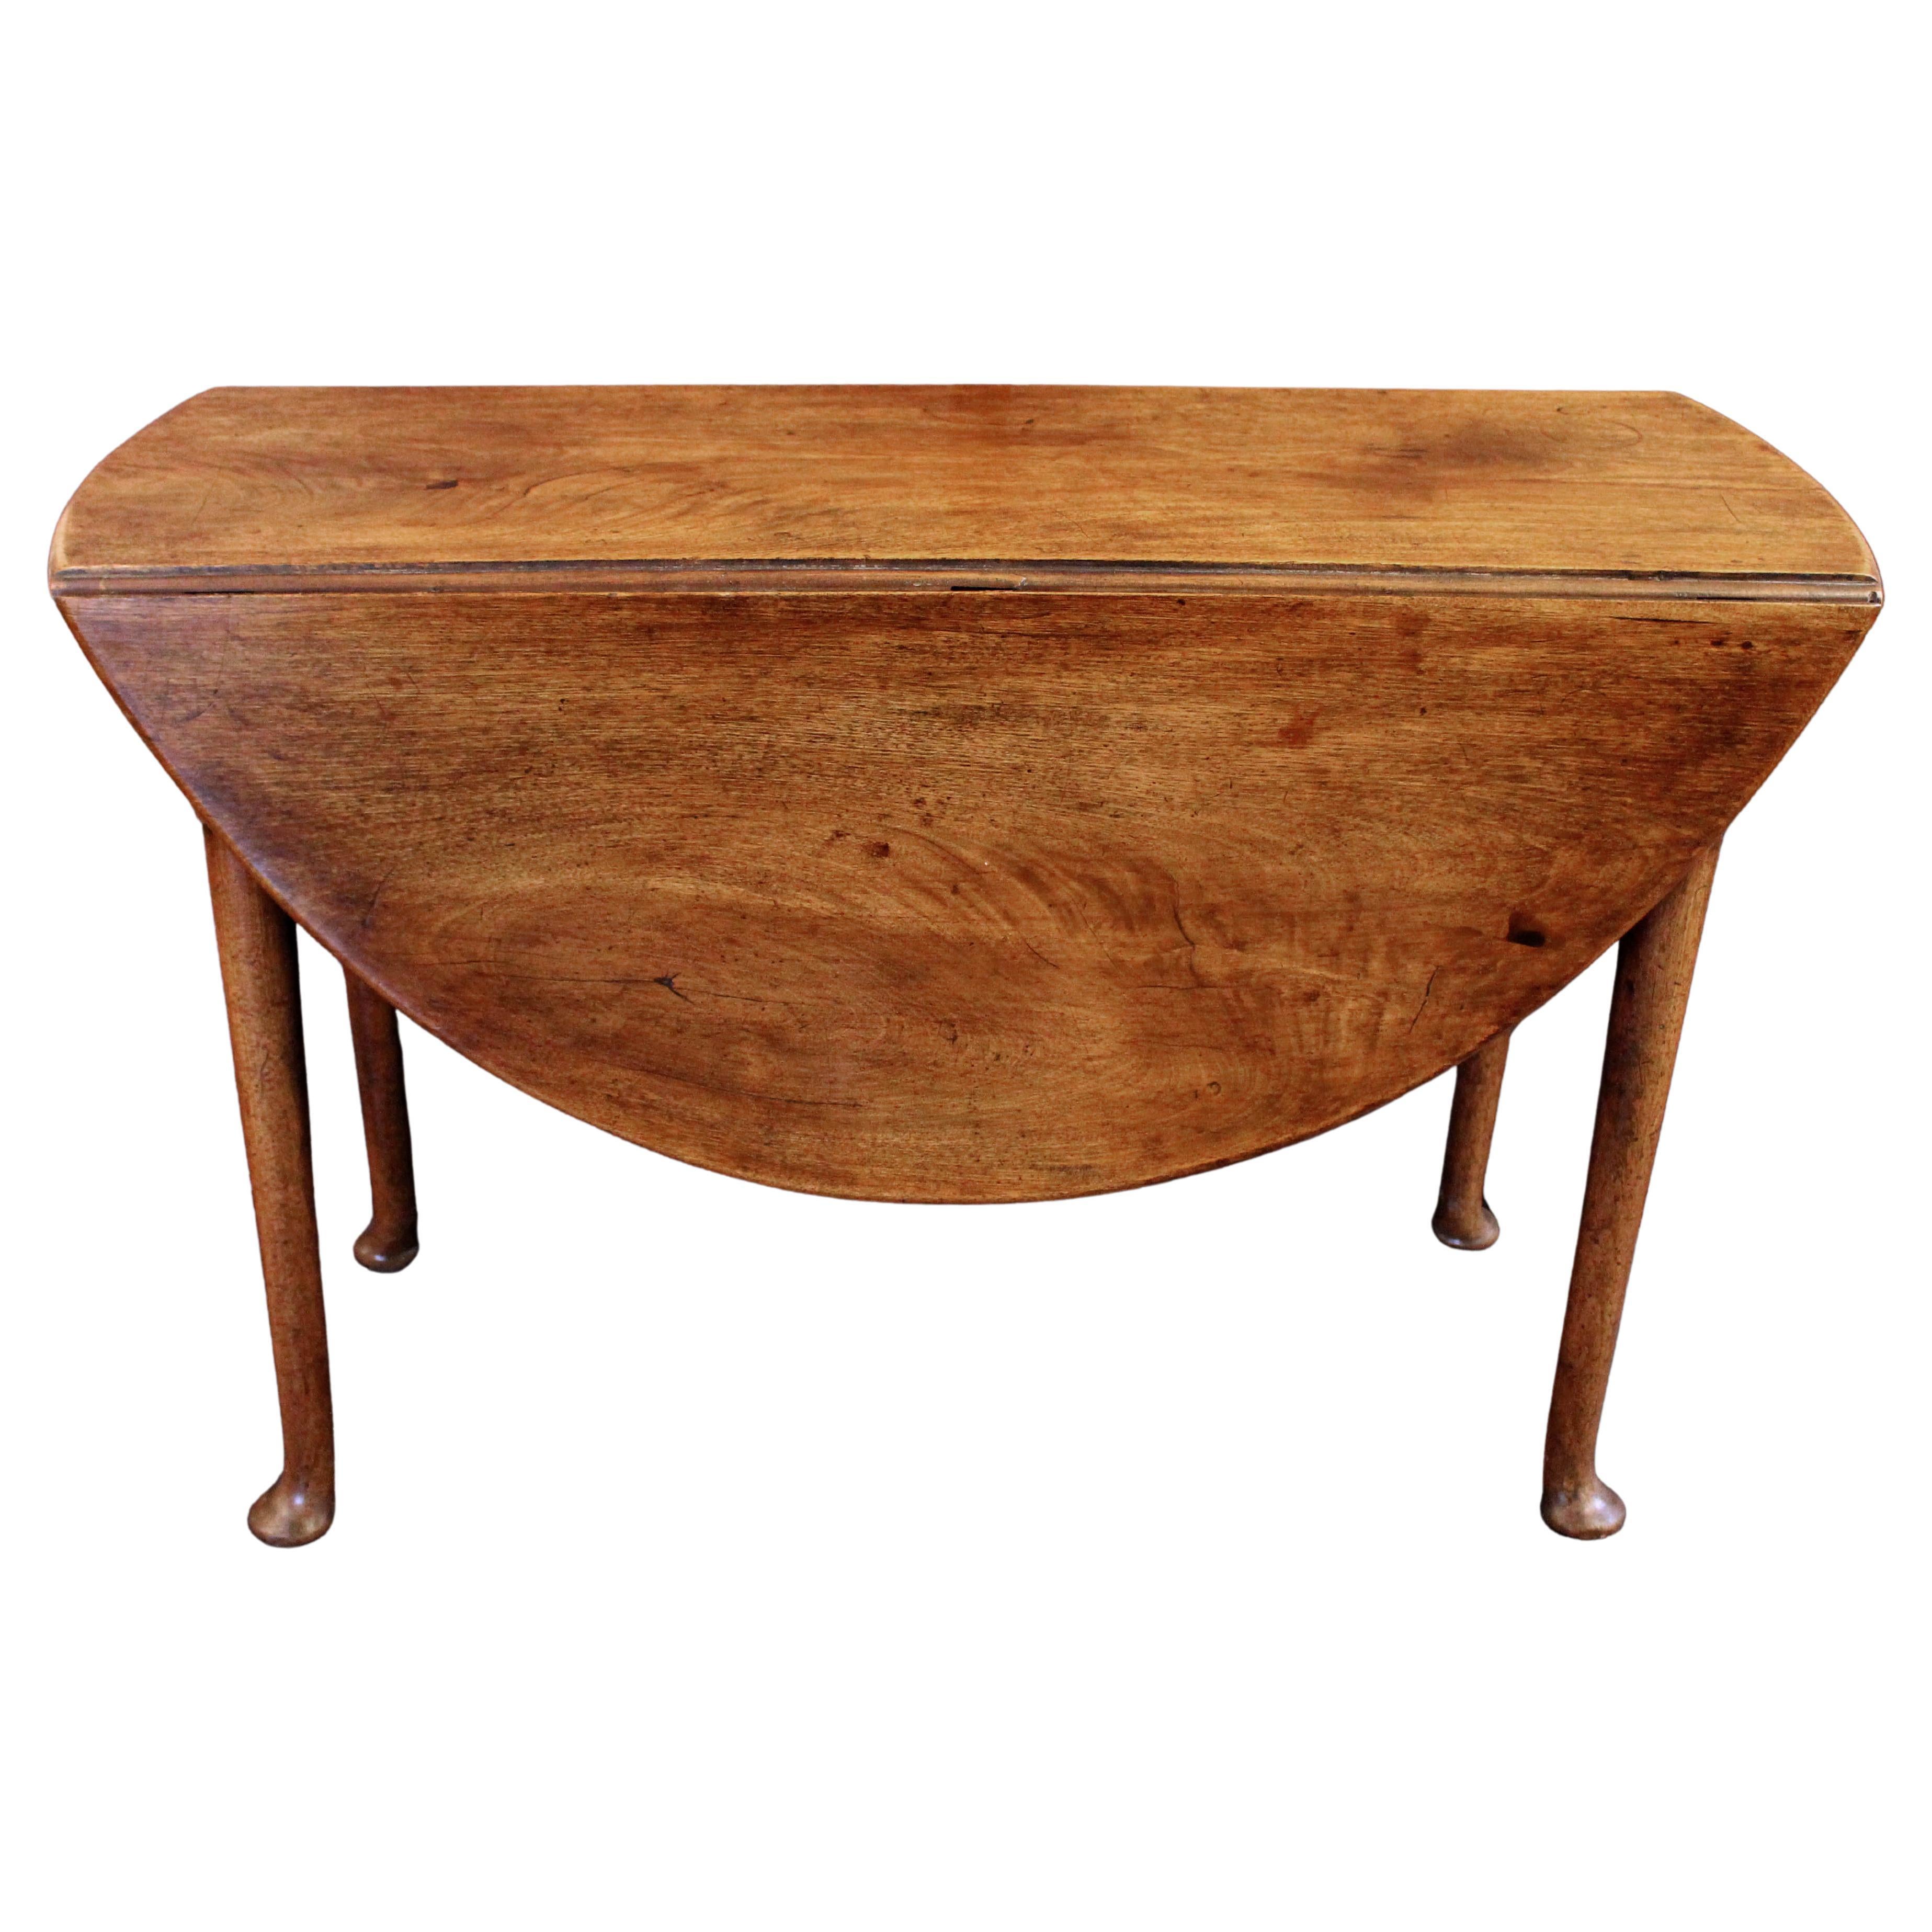 Circa 1750 George II Period Oval Drop Leaf Table, English For Sale